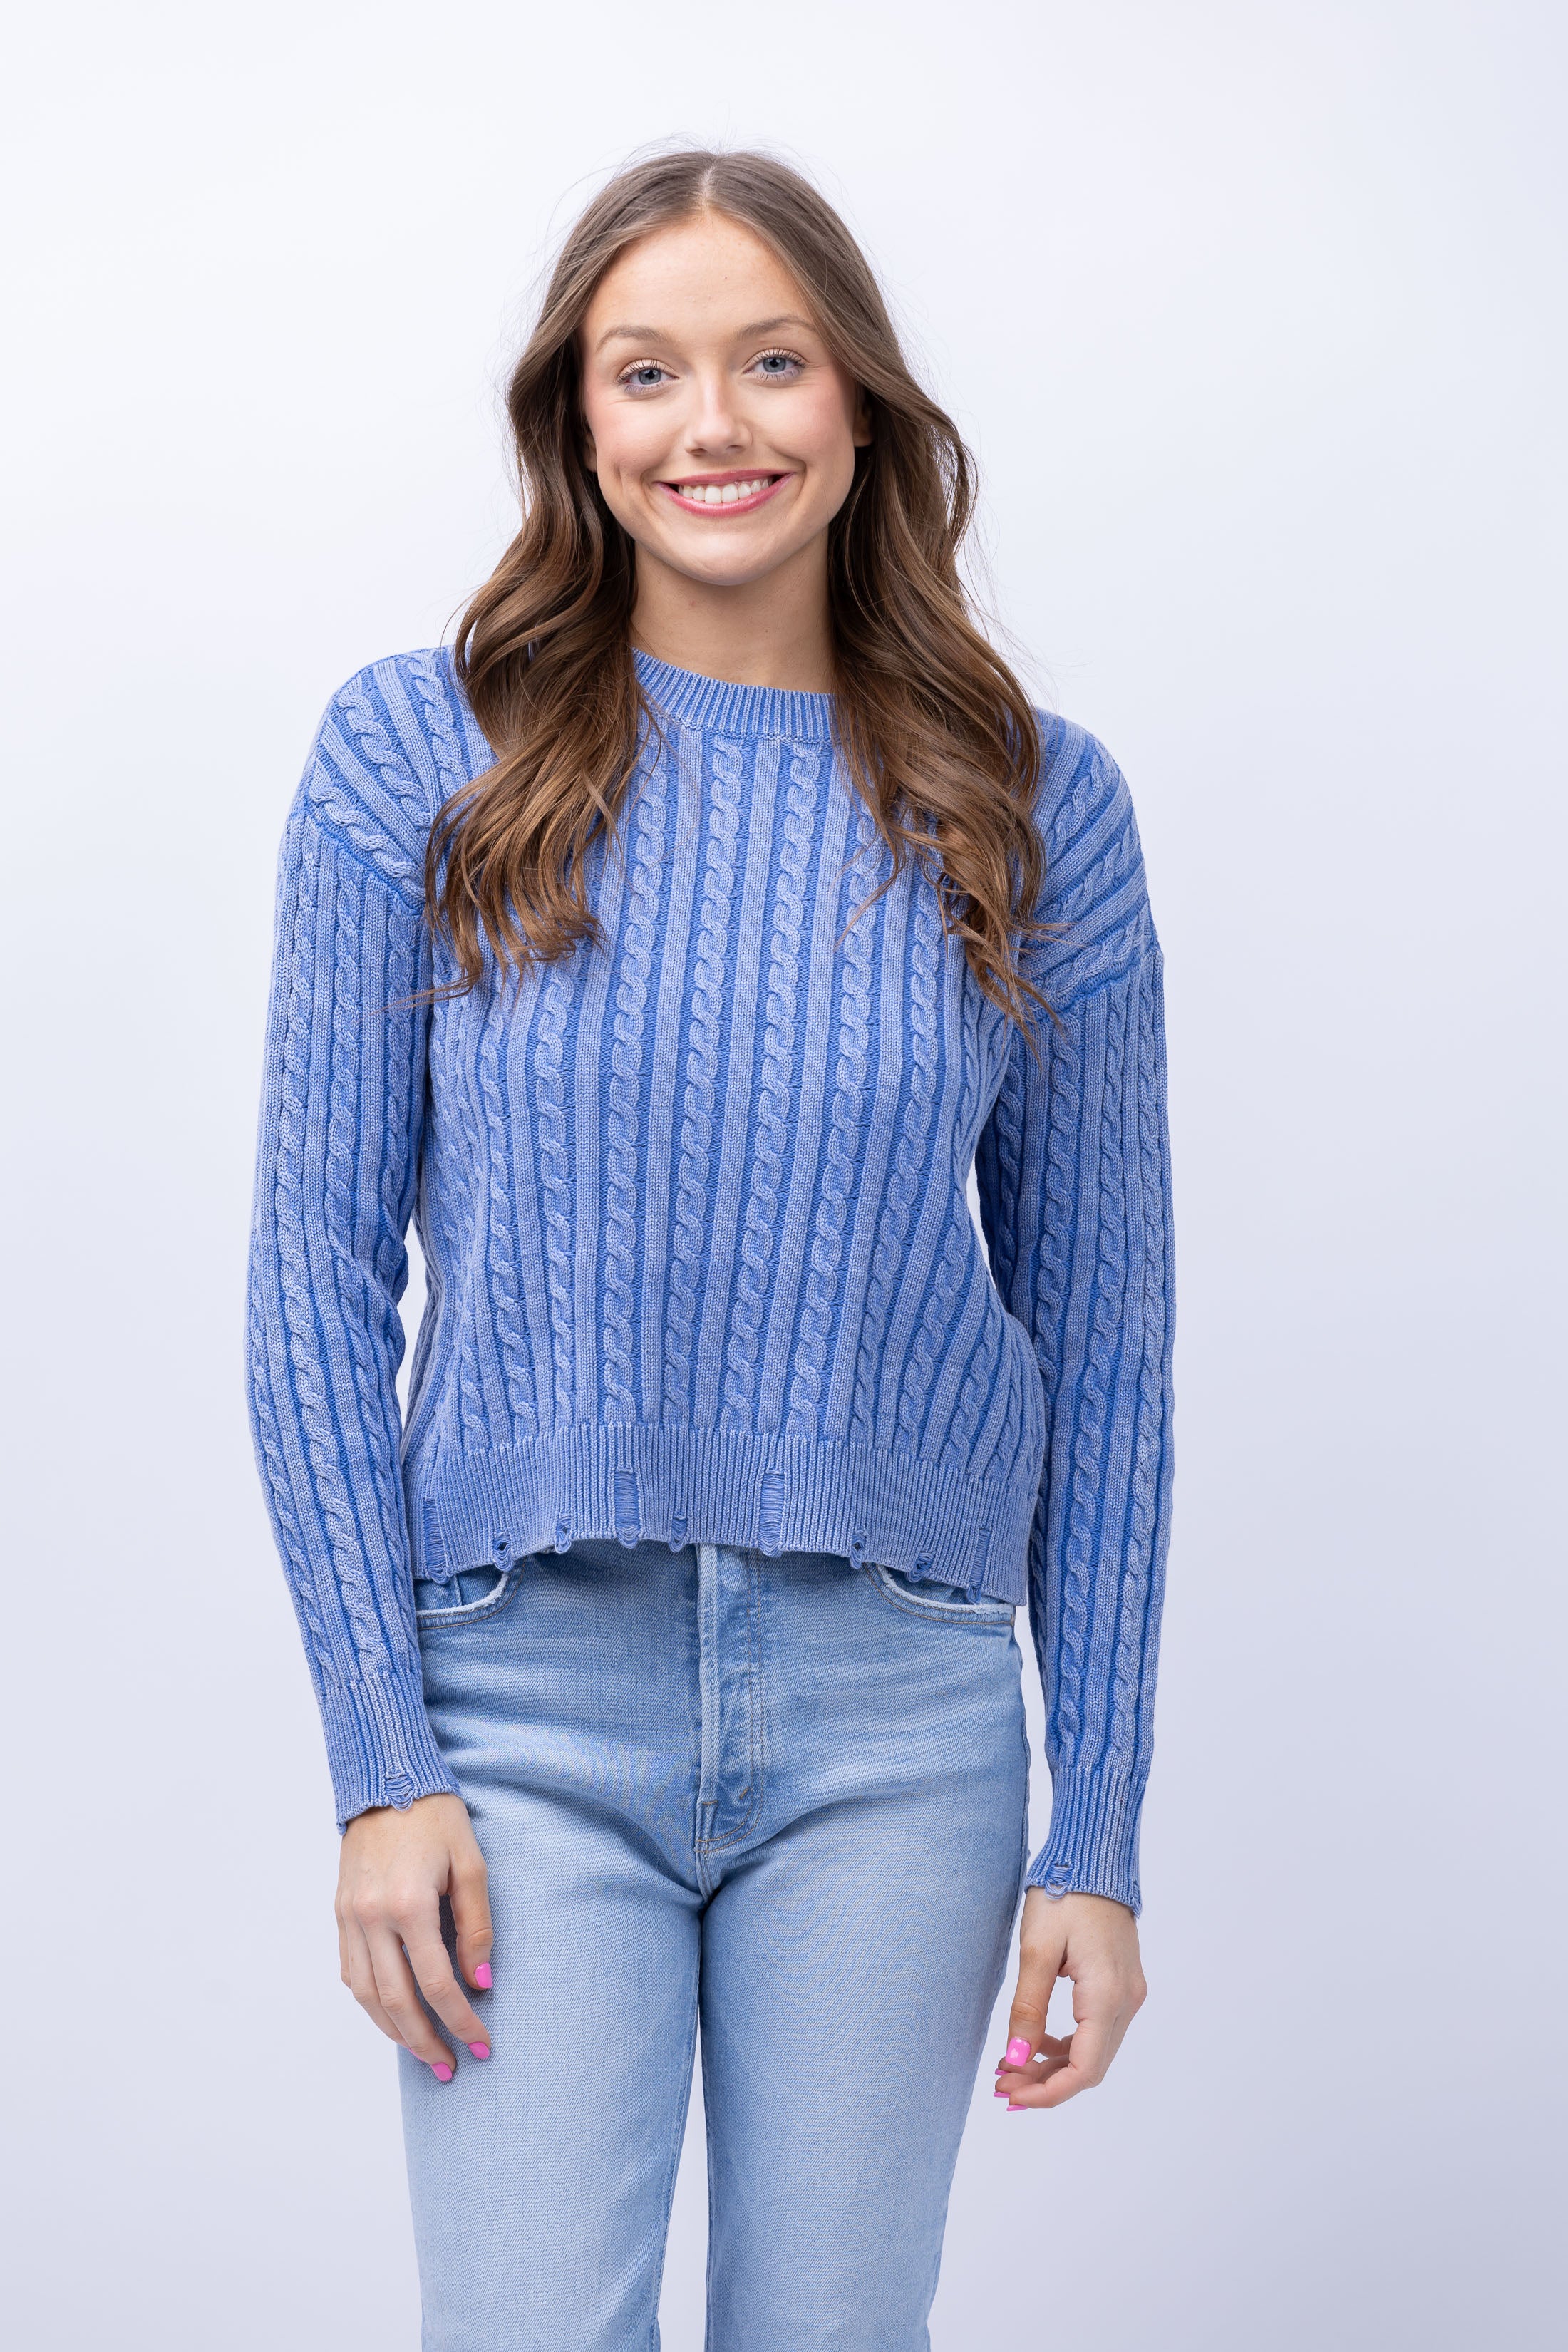 Elliott Lauren Sweater in Denim